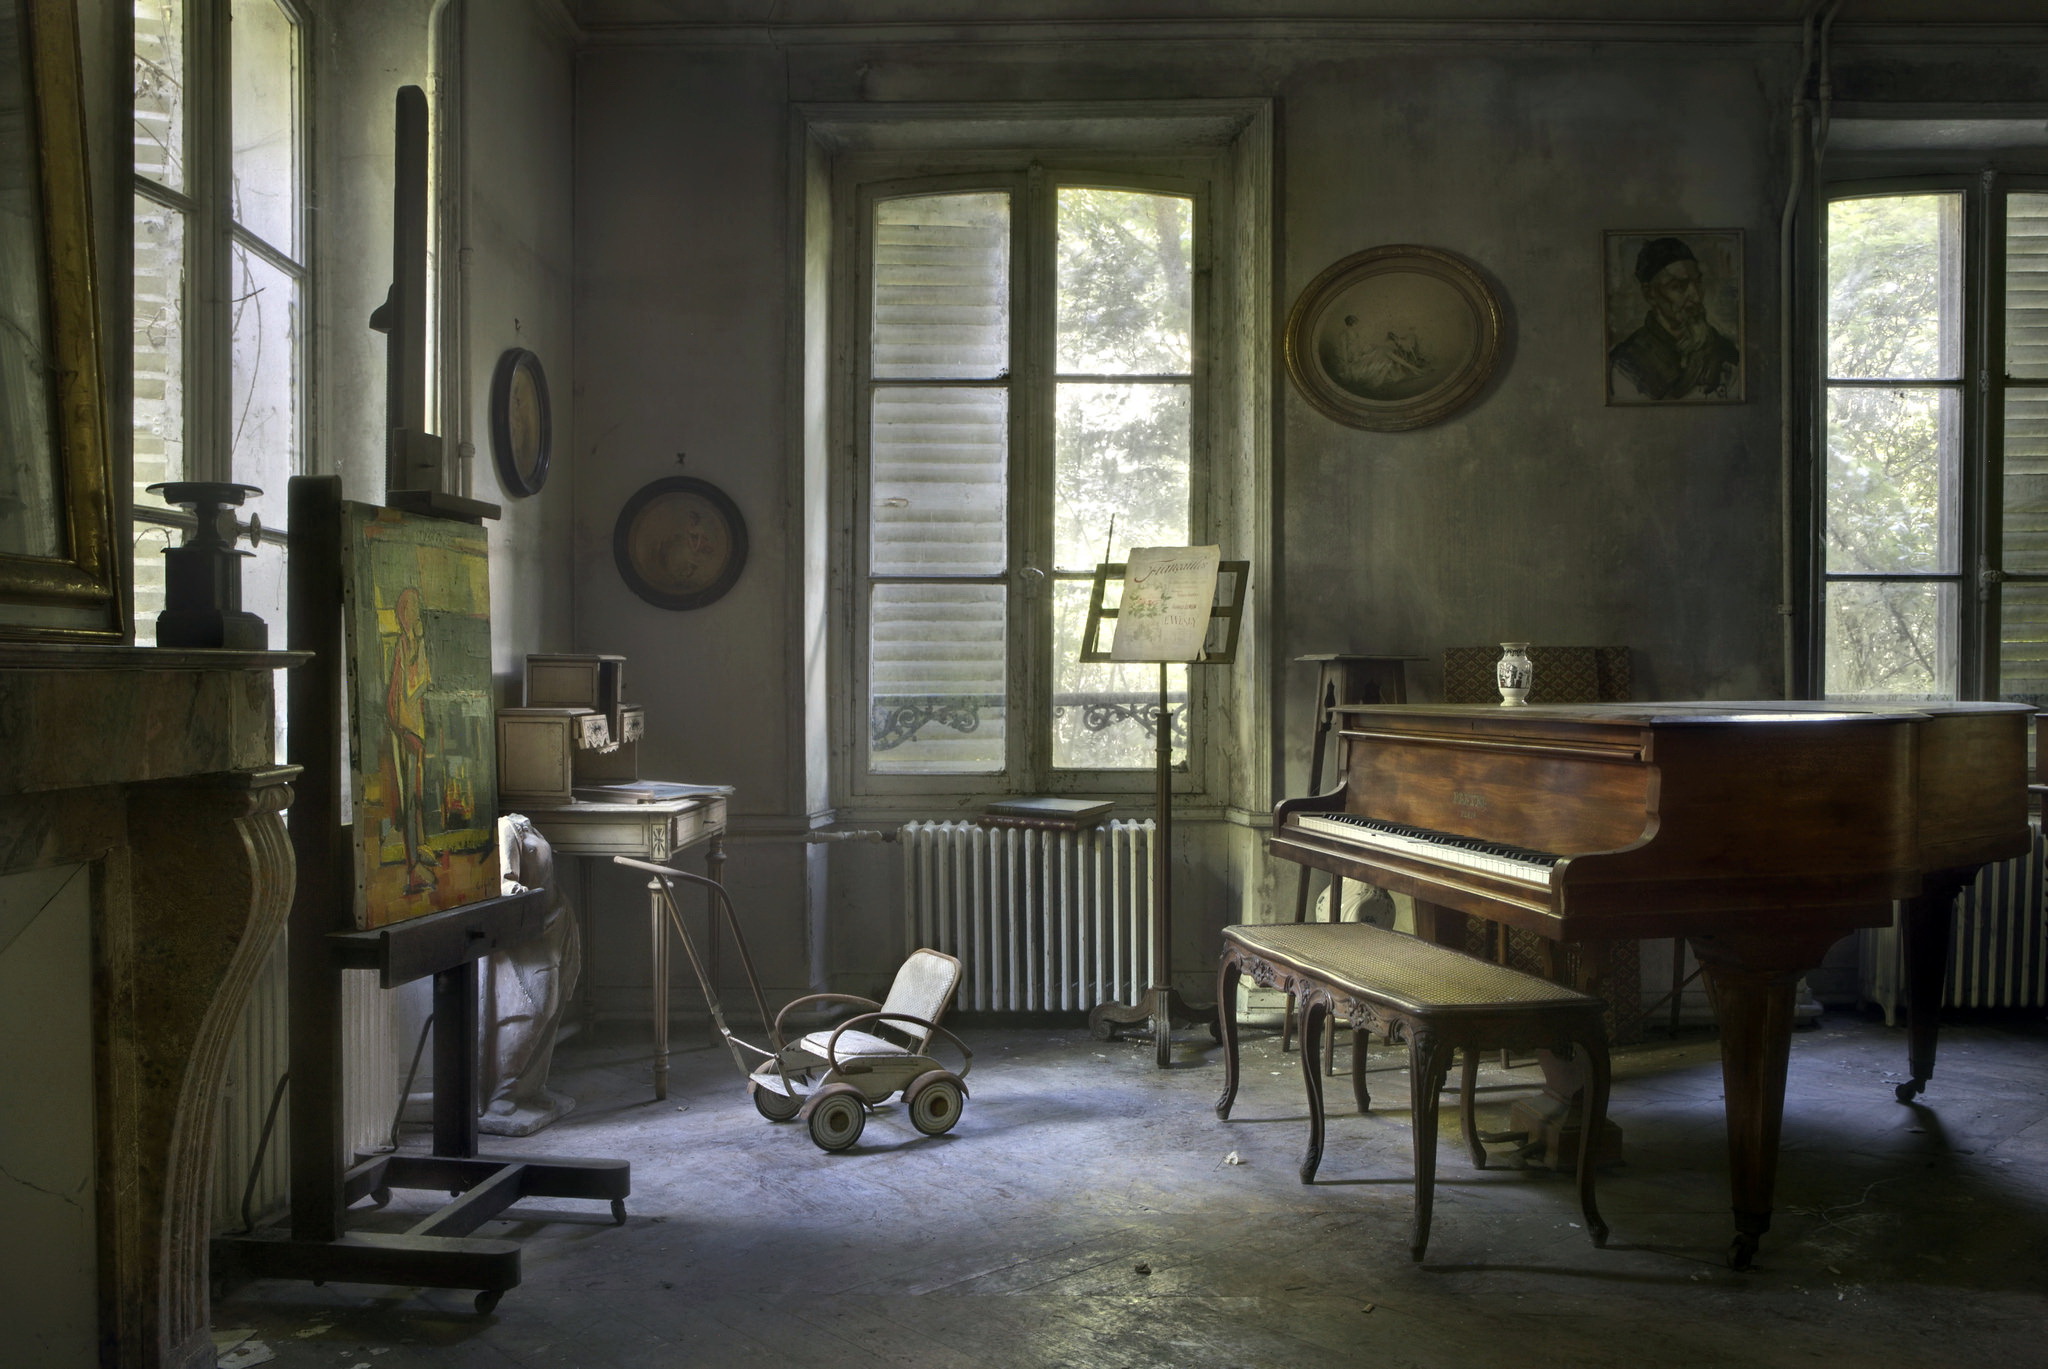 General 2048x1369 room interior piano musical instrument